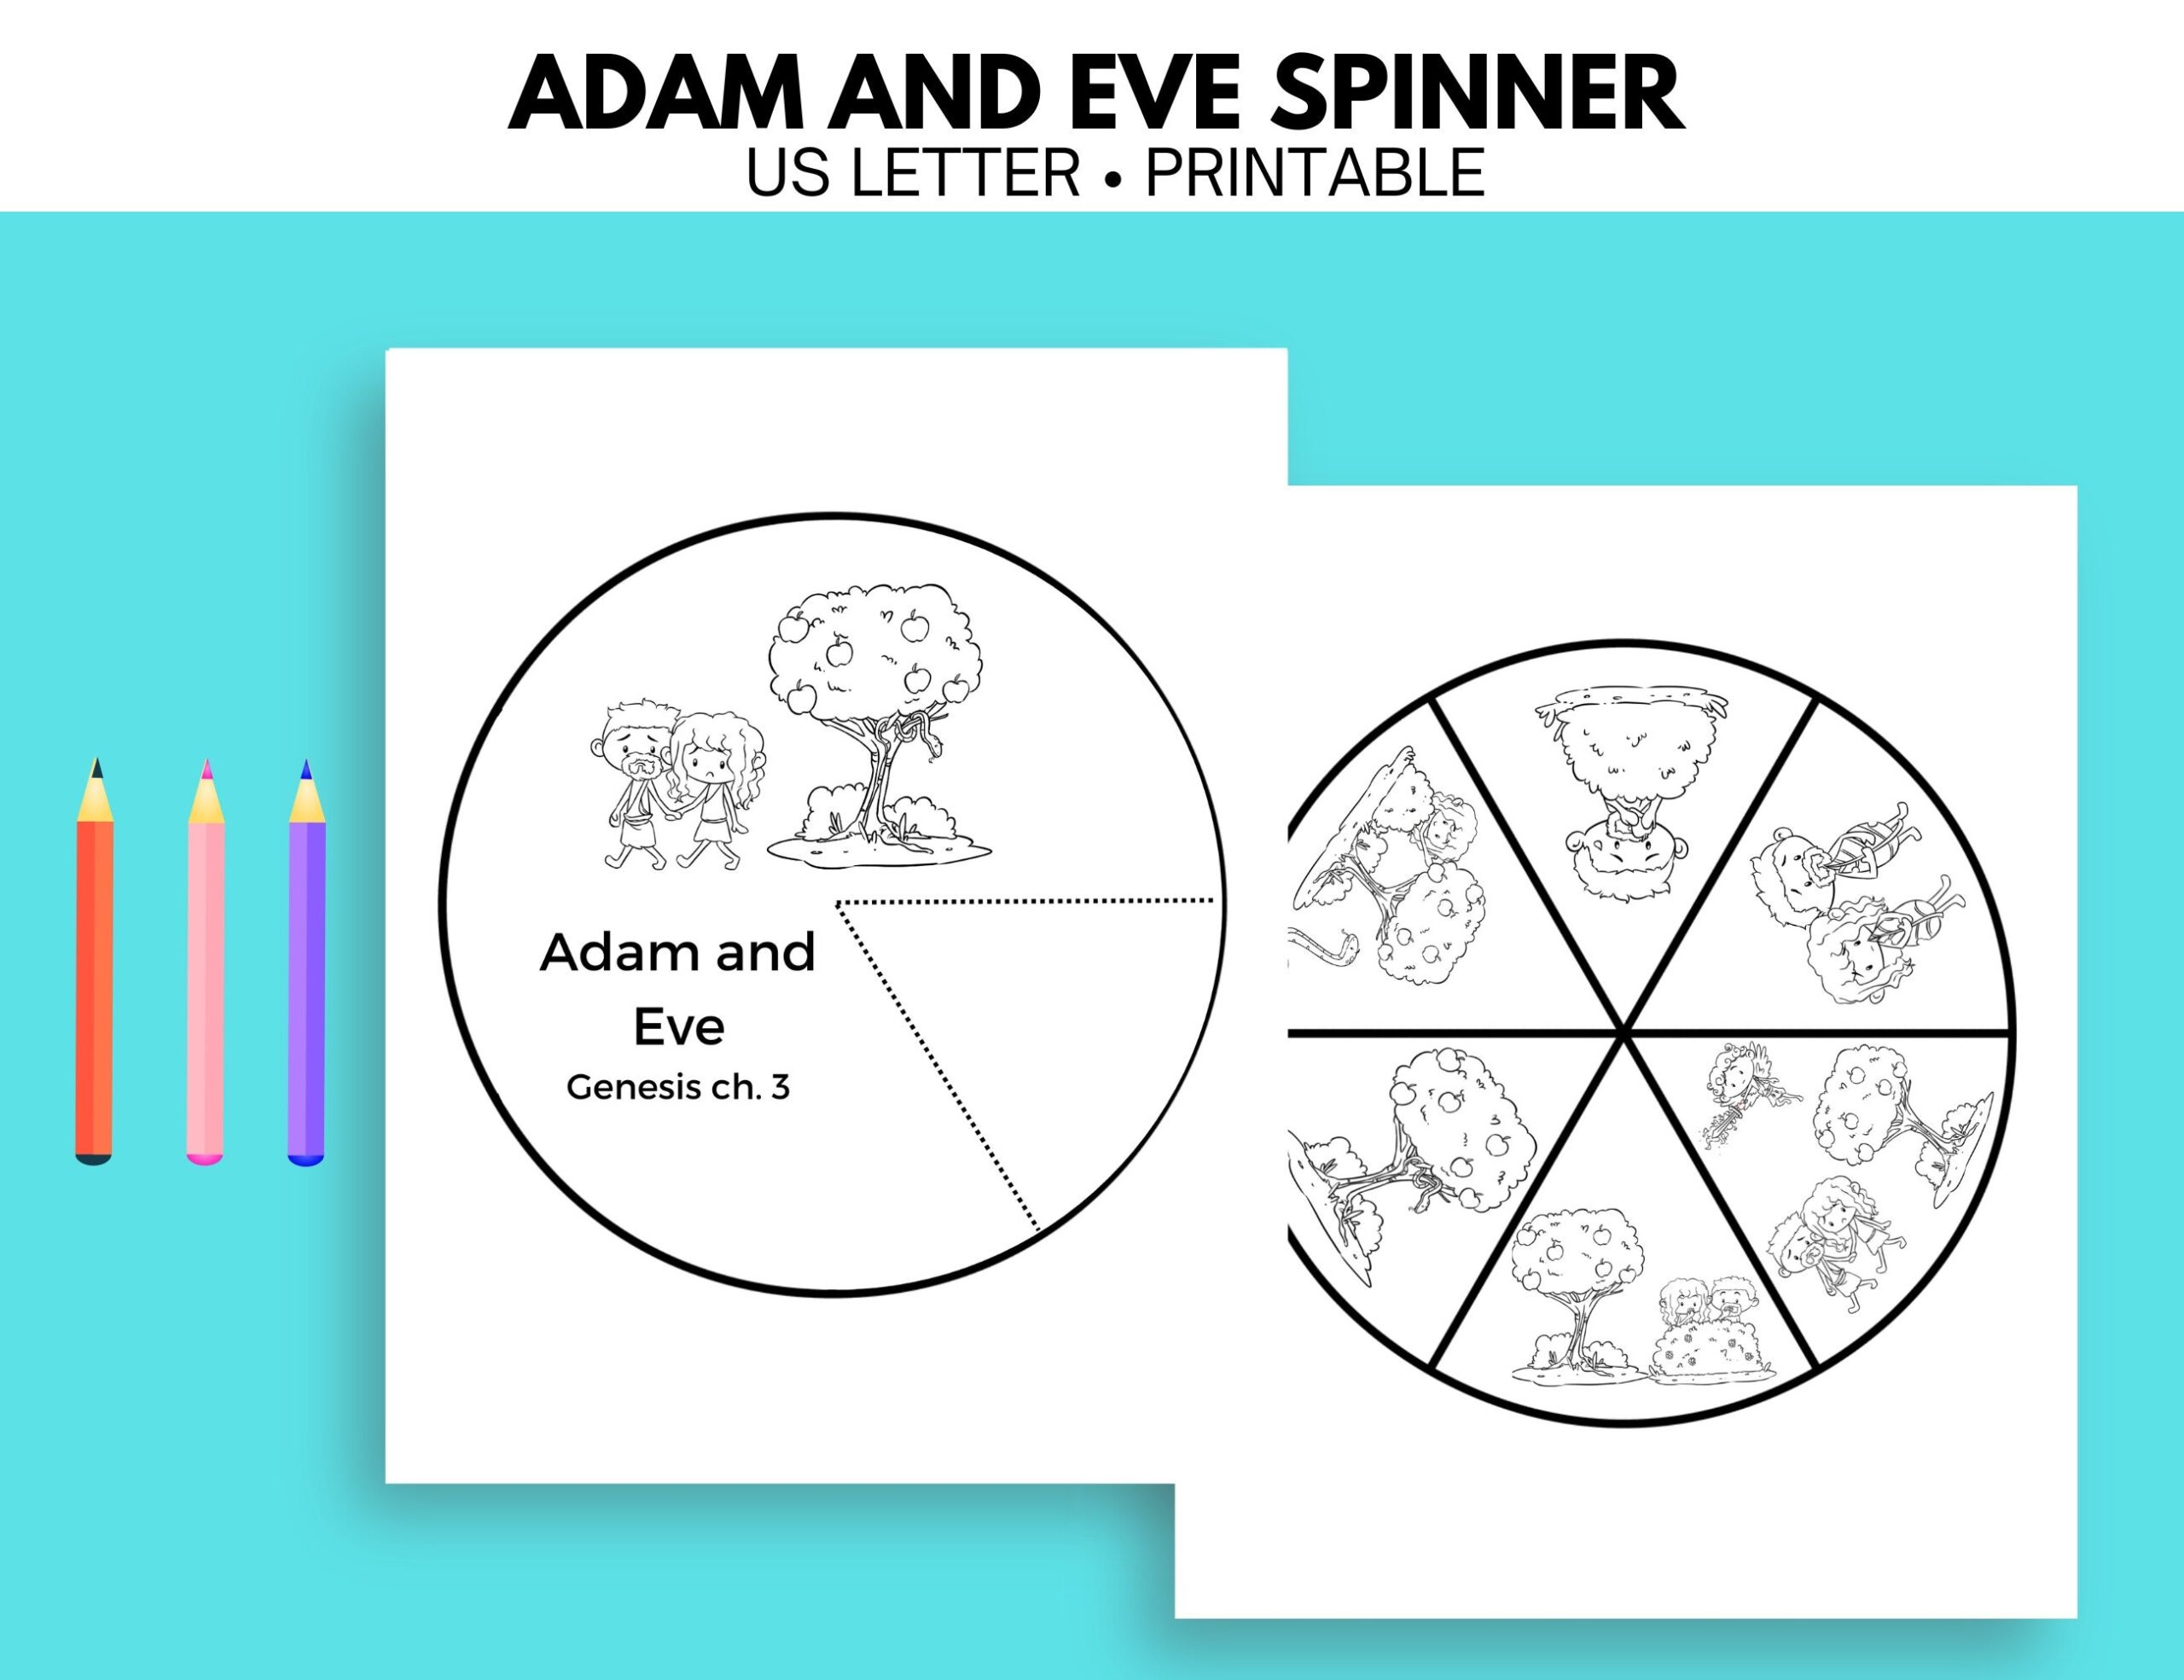 Adam And Eve Spinner Garden Of Eden Bible Story Sunday School Craft Vacation Bible School Printable Spinner Craft Etsy